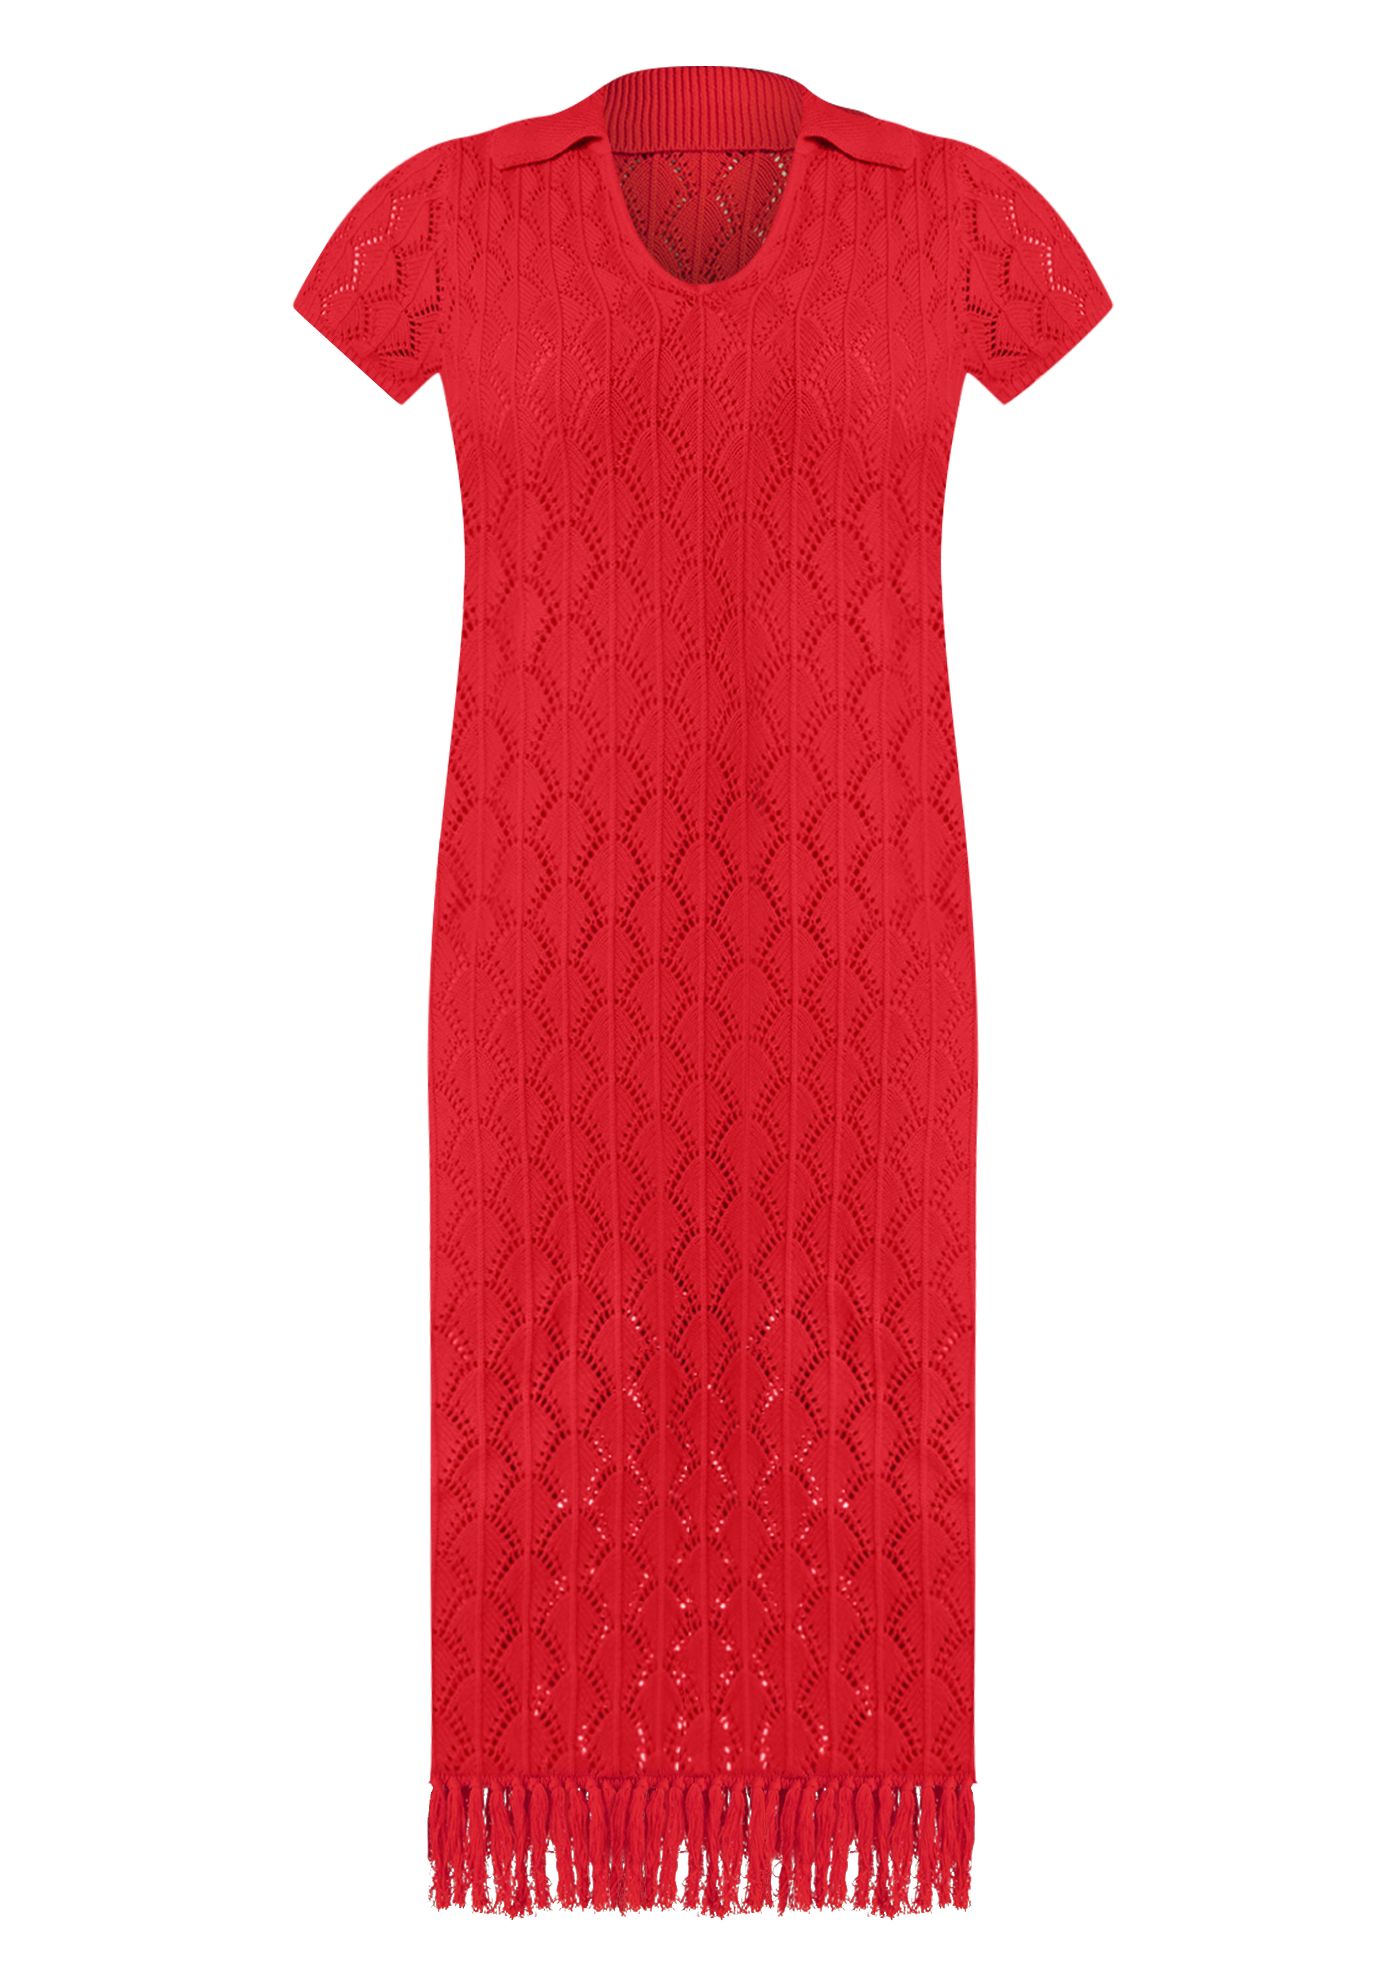 Crochet Maxi Dress With Collar & Fringe | Eloquii